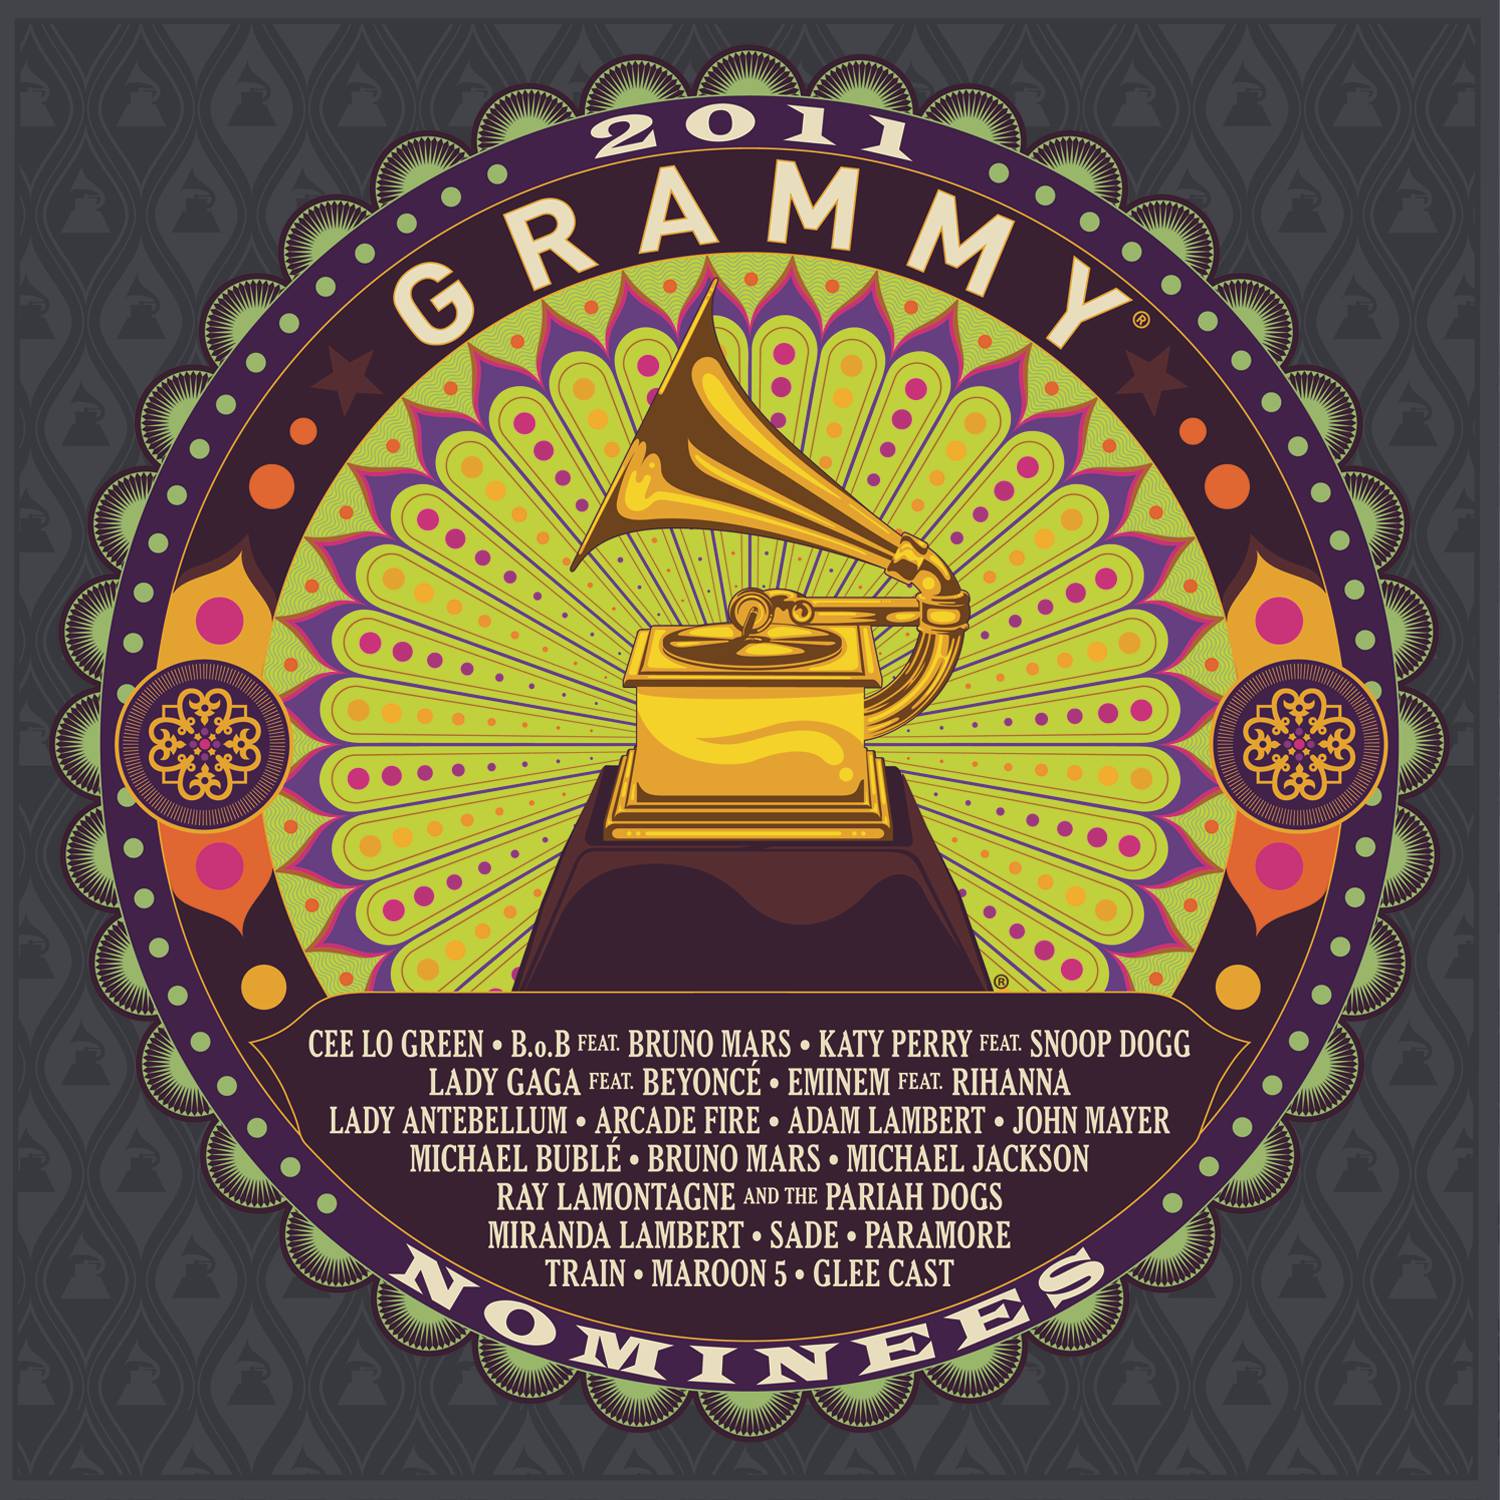 2011 Grammy Nominees专辑